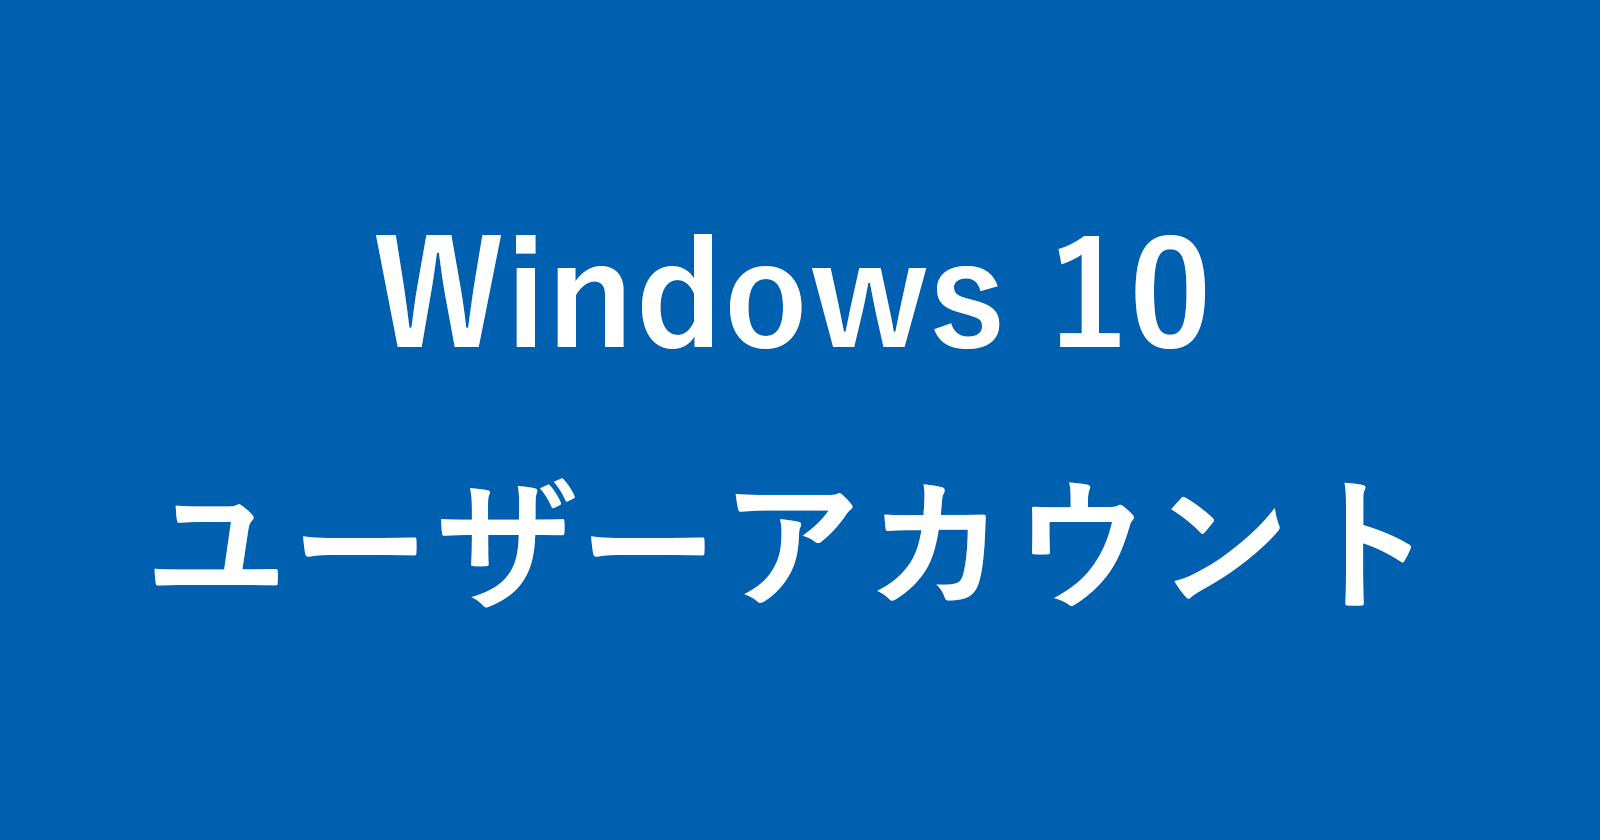 windows 10 user